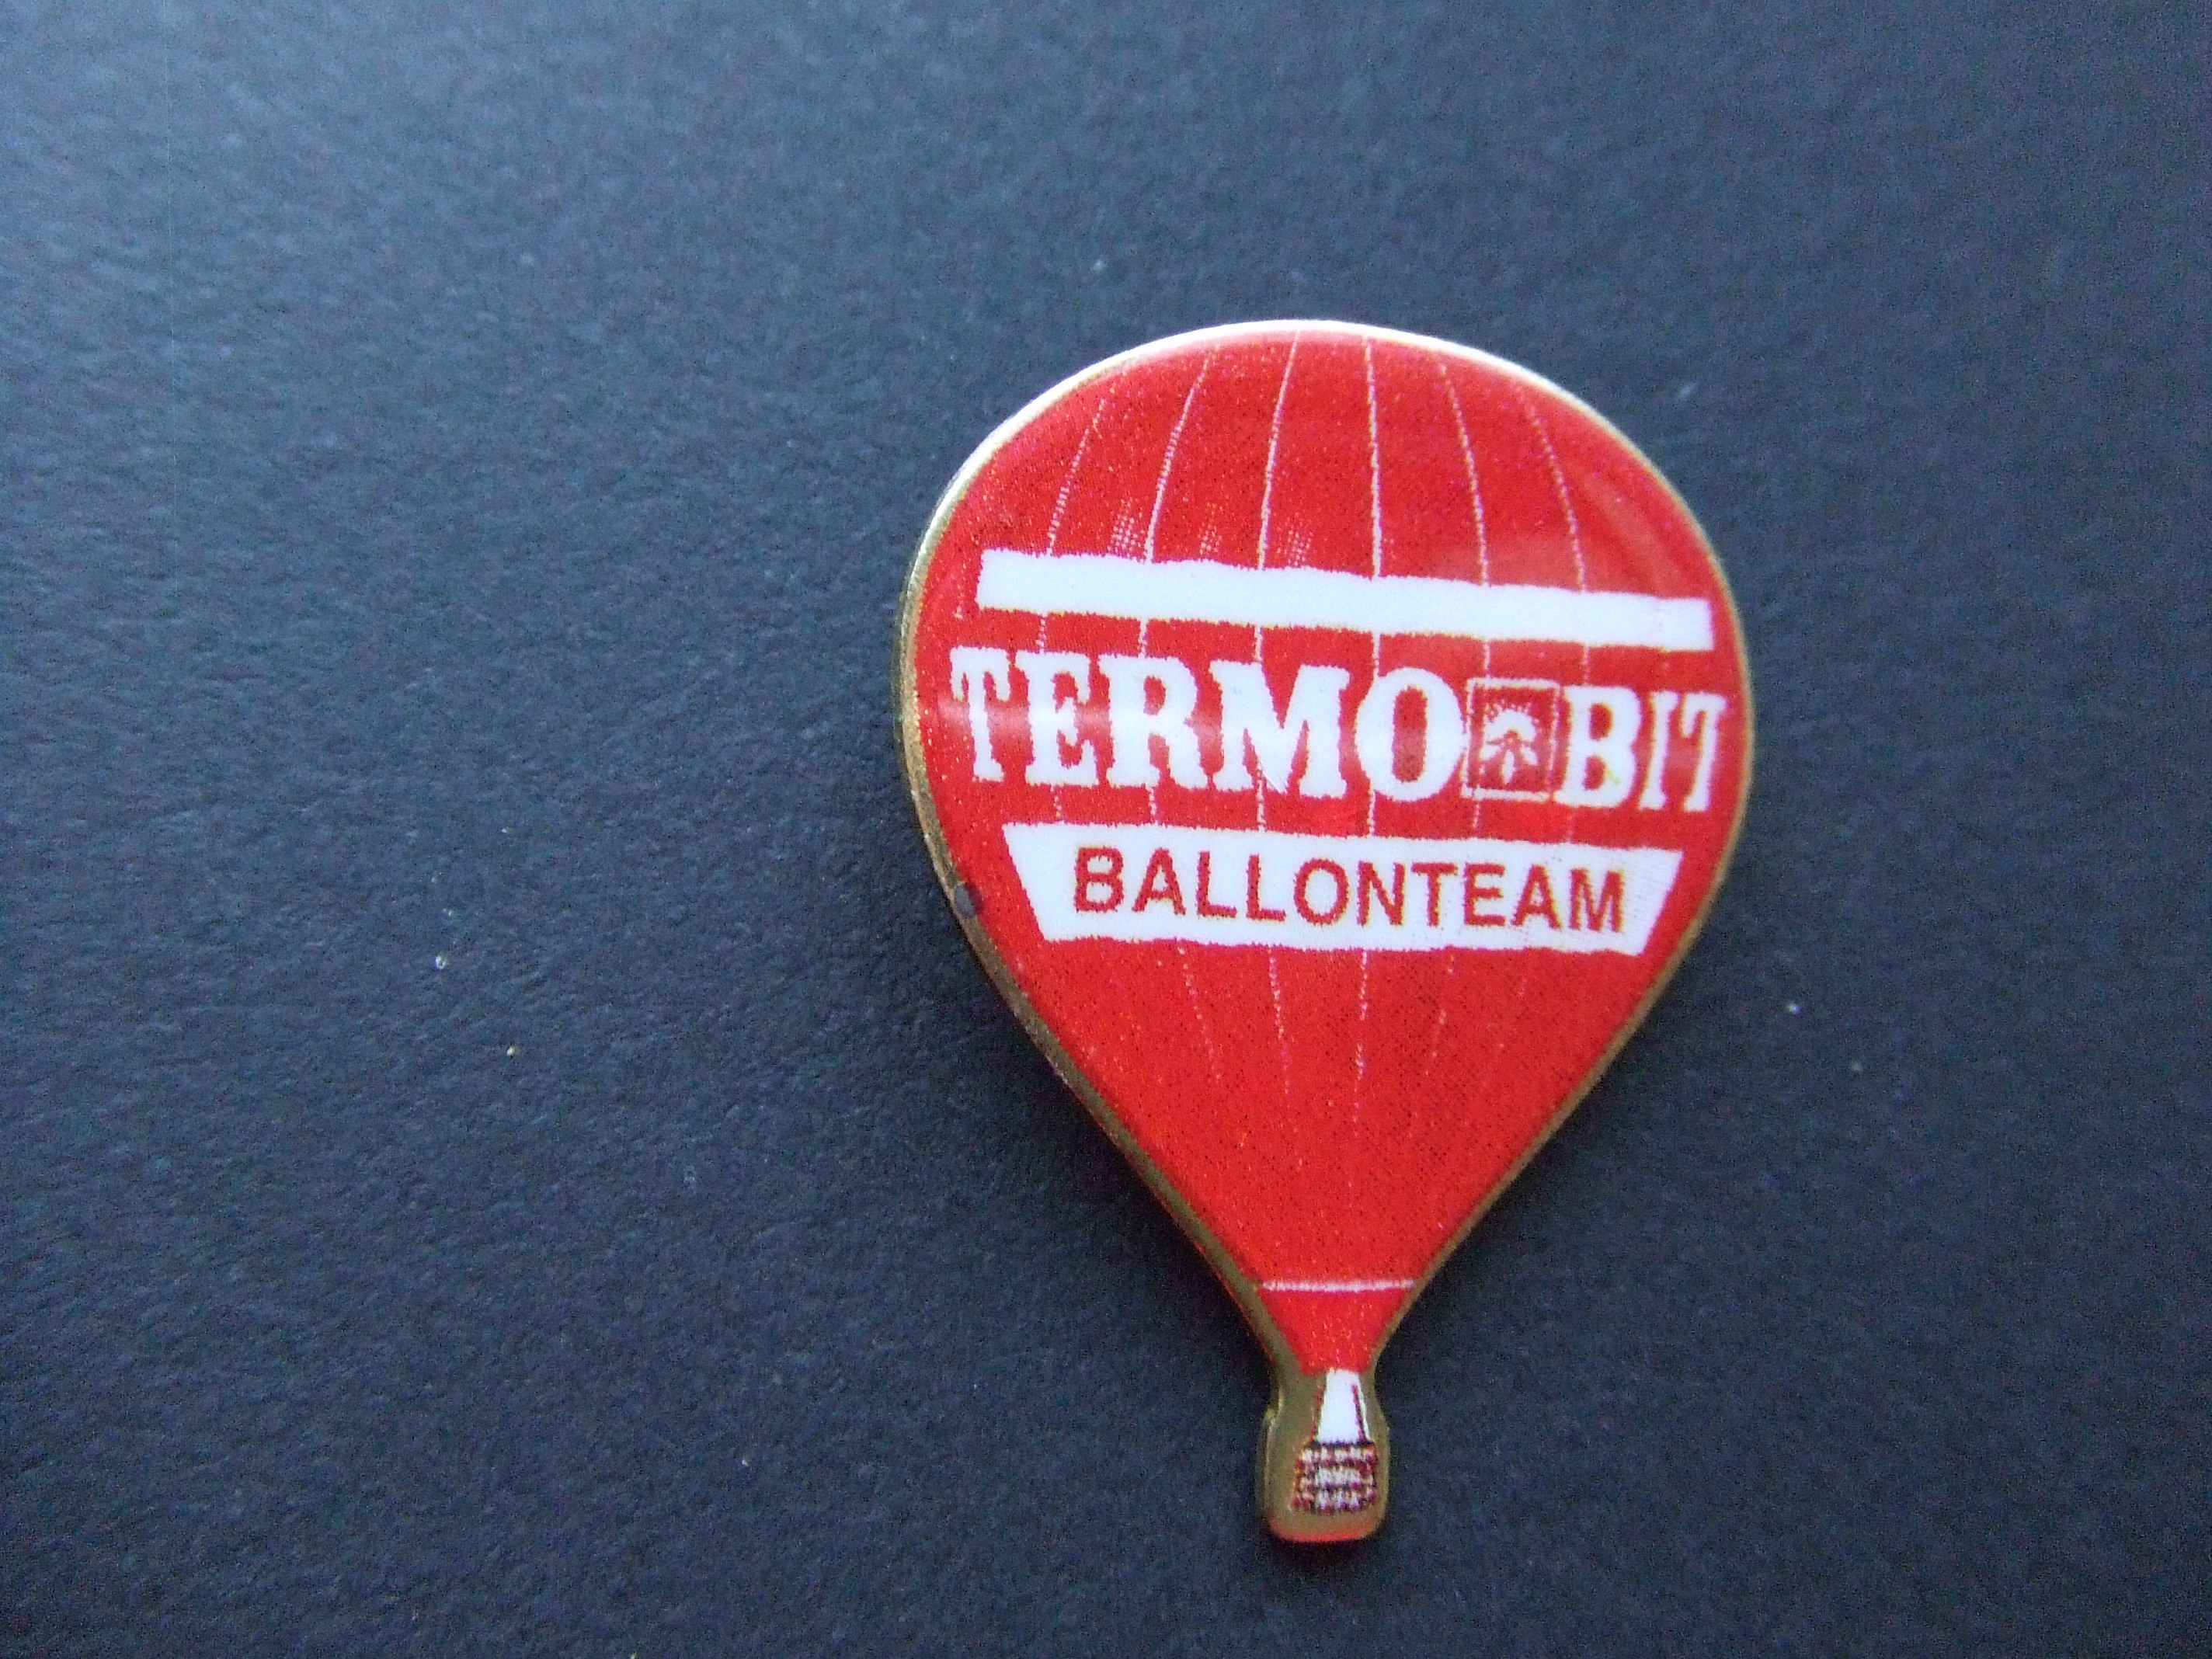 Thermobit ballonteam luchtballon